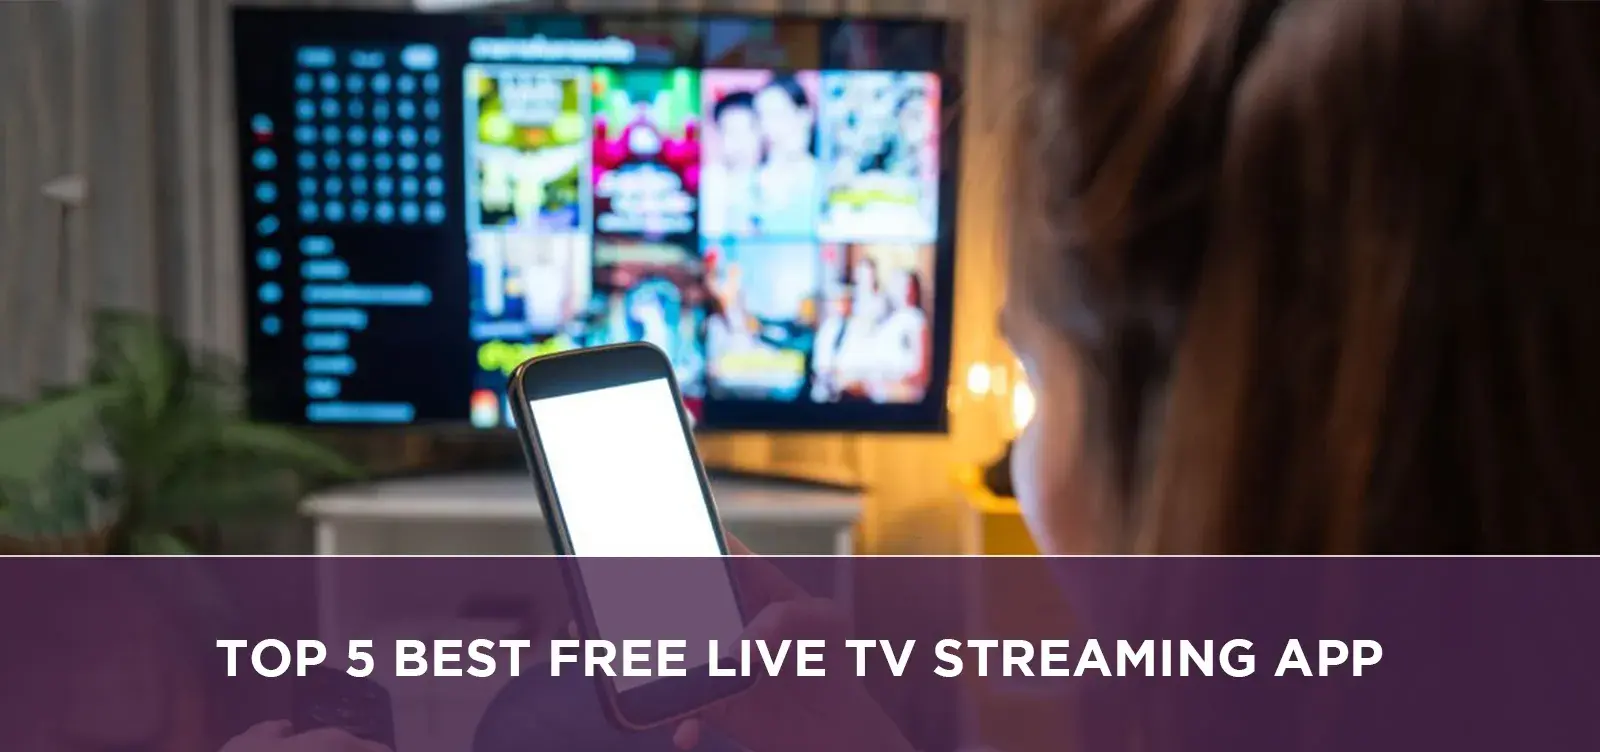 Top 5 Best Free Live TV Streaming App